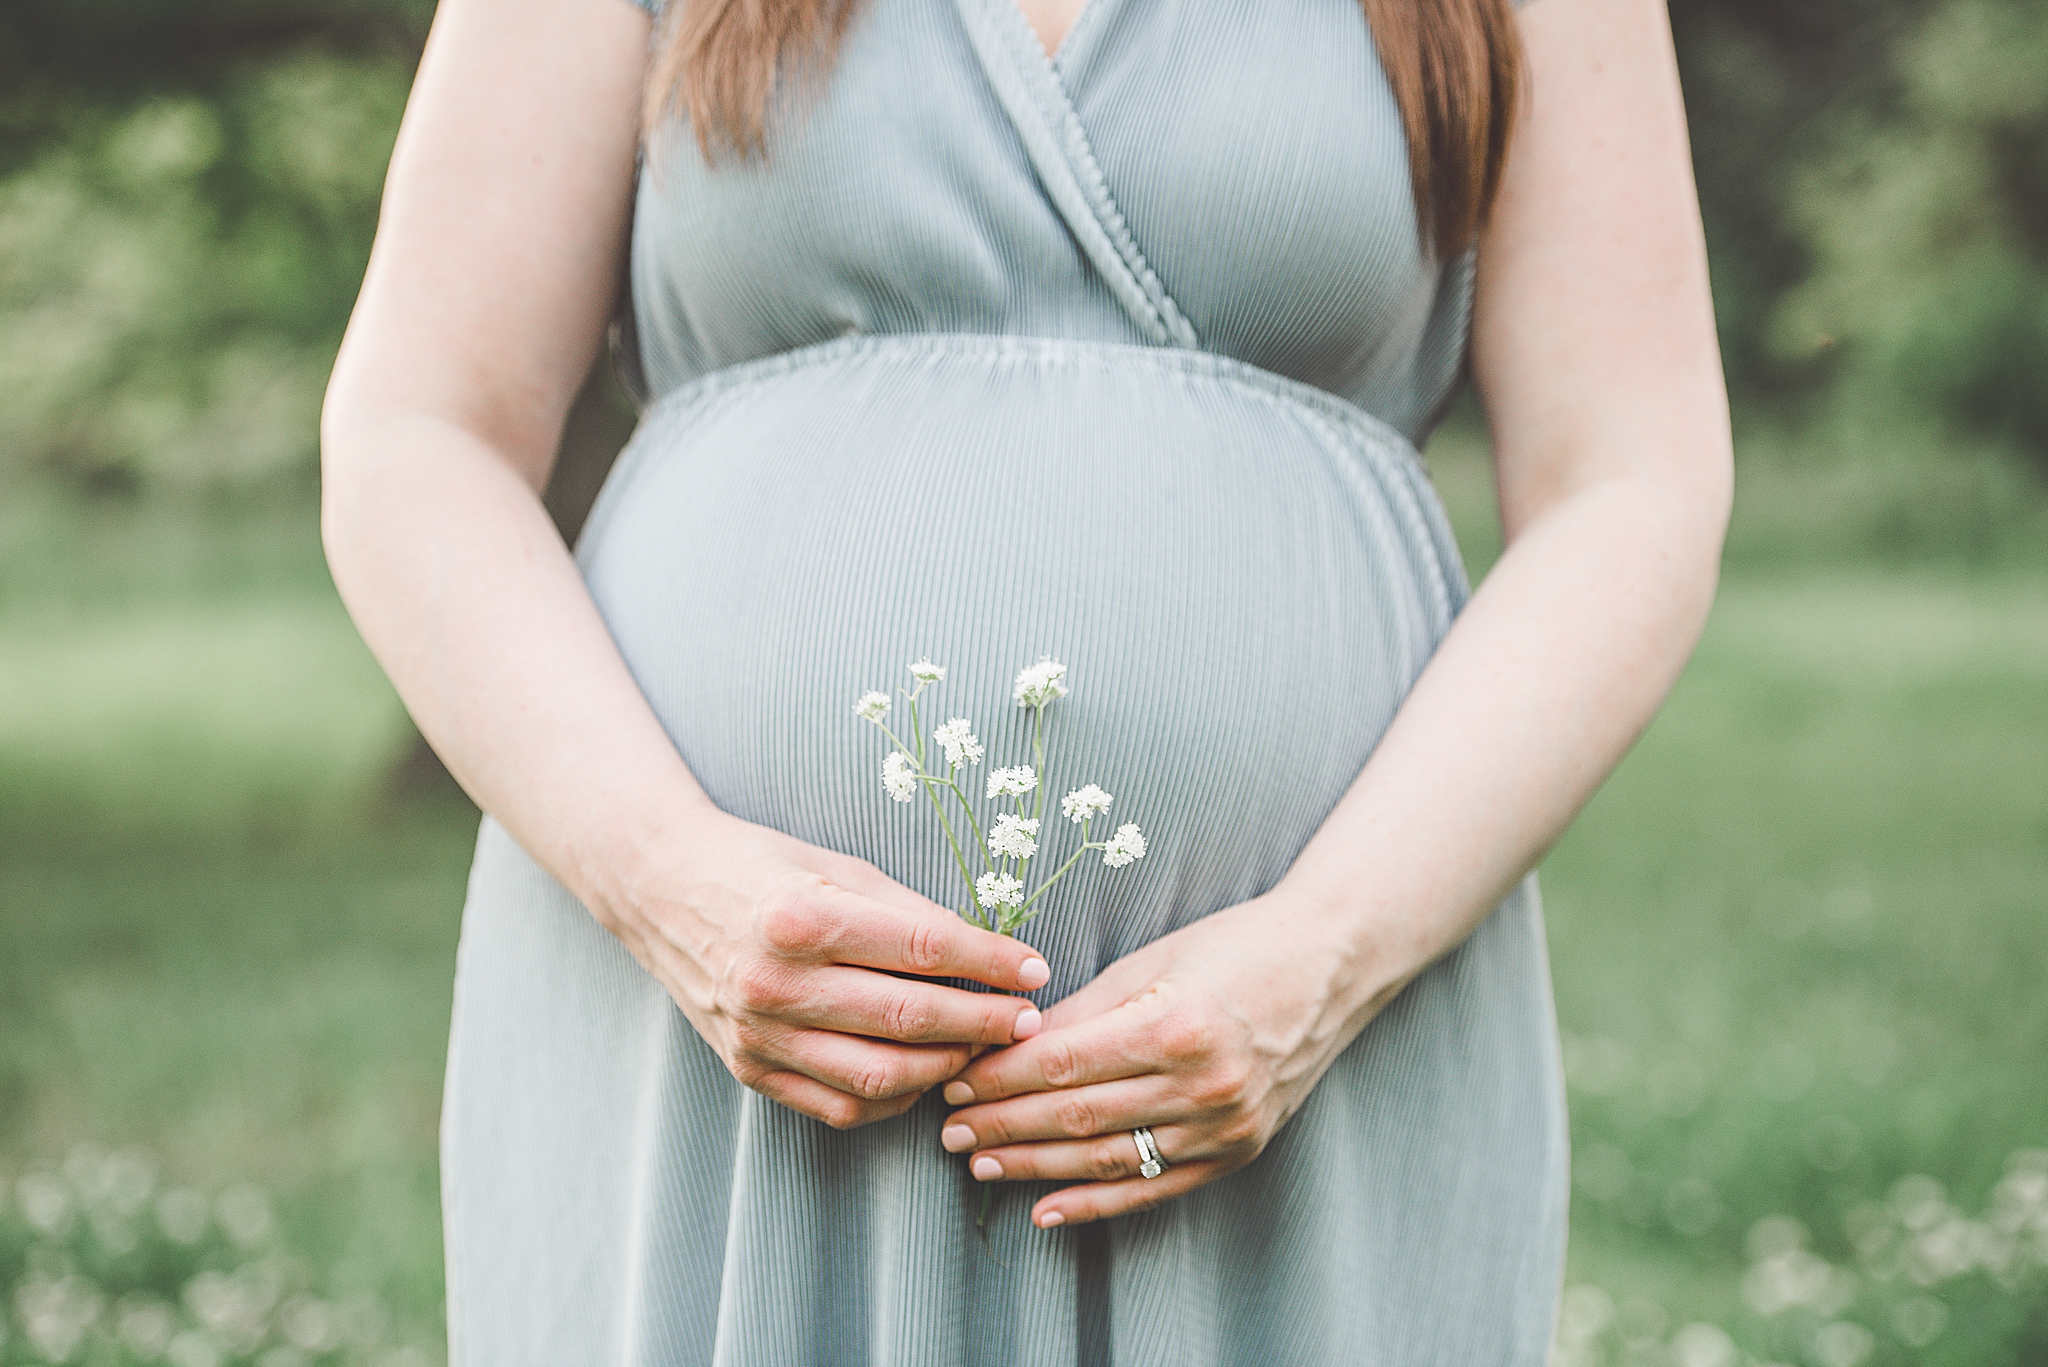 Kettering Ohio Maternity Photographer | Expecting Baby Neely